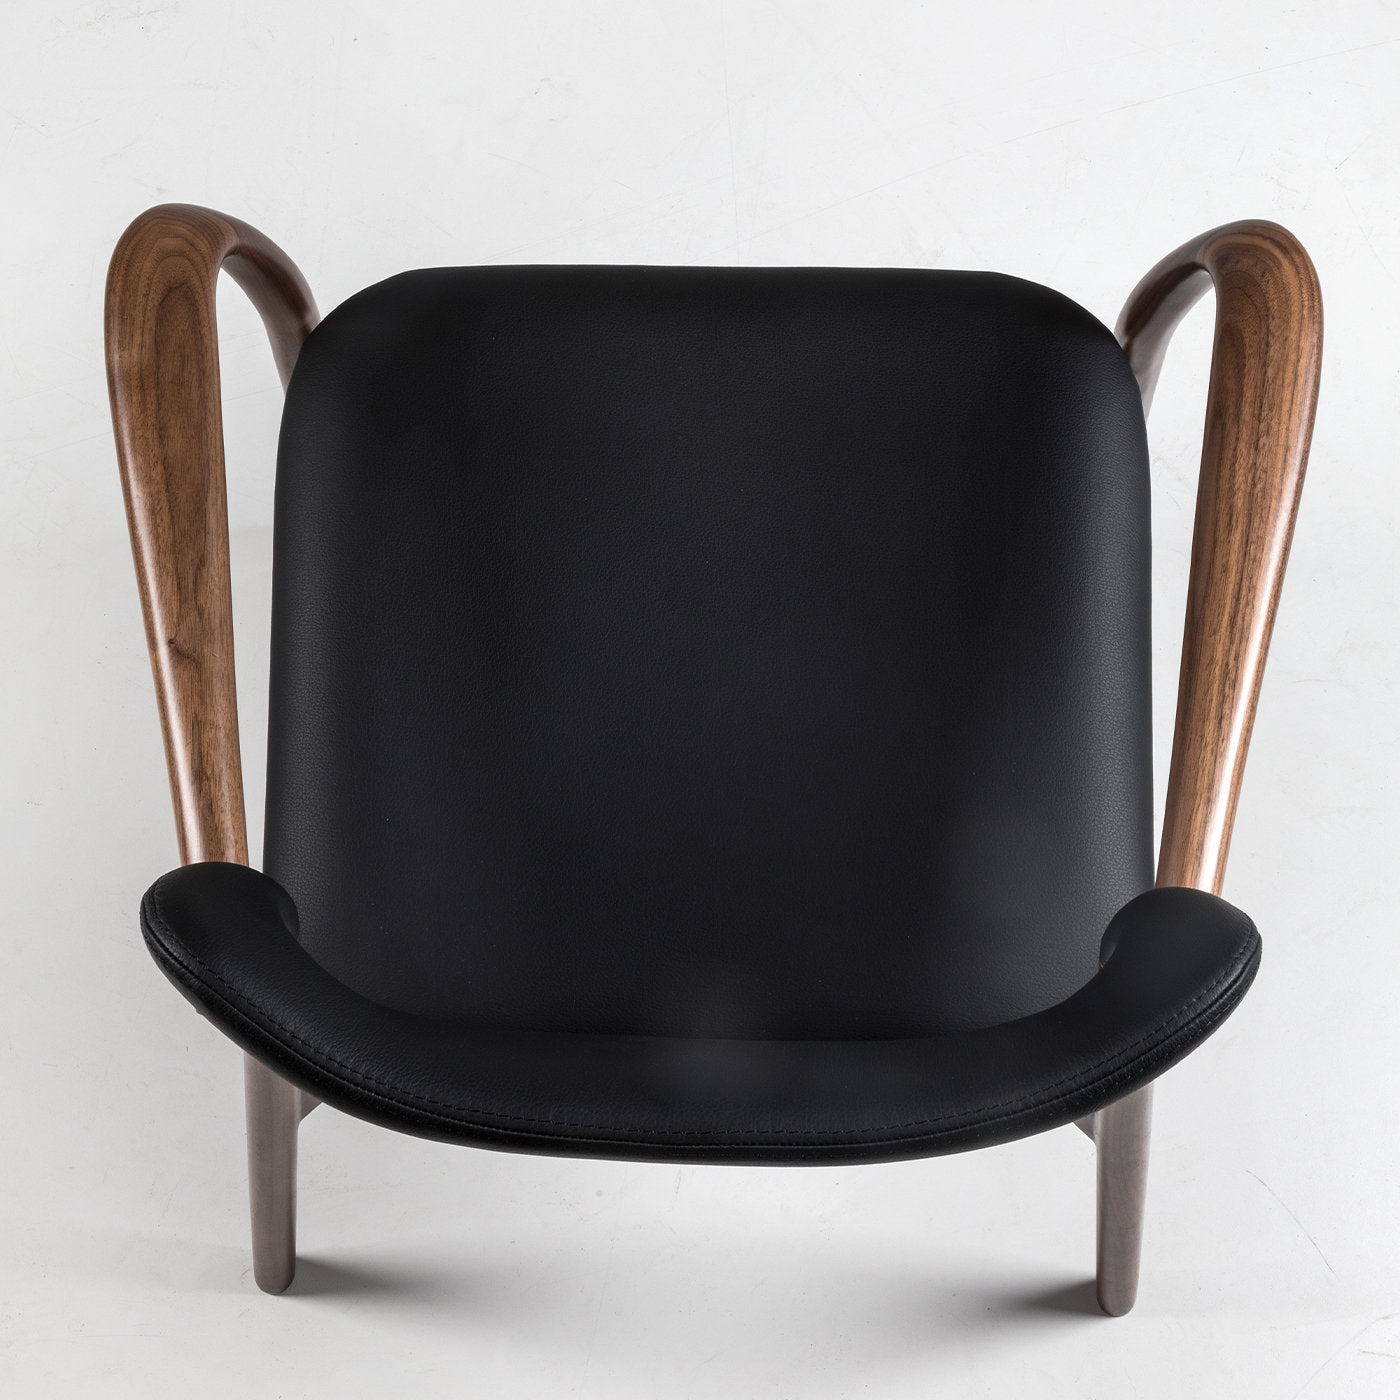 Kong Chair by Alex Bocchi and Alberto Pozzoli - Alternative view 2